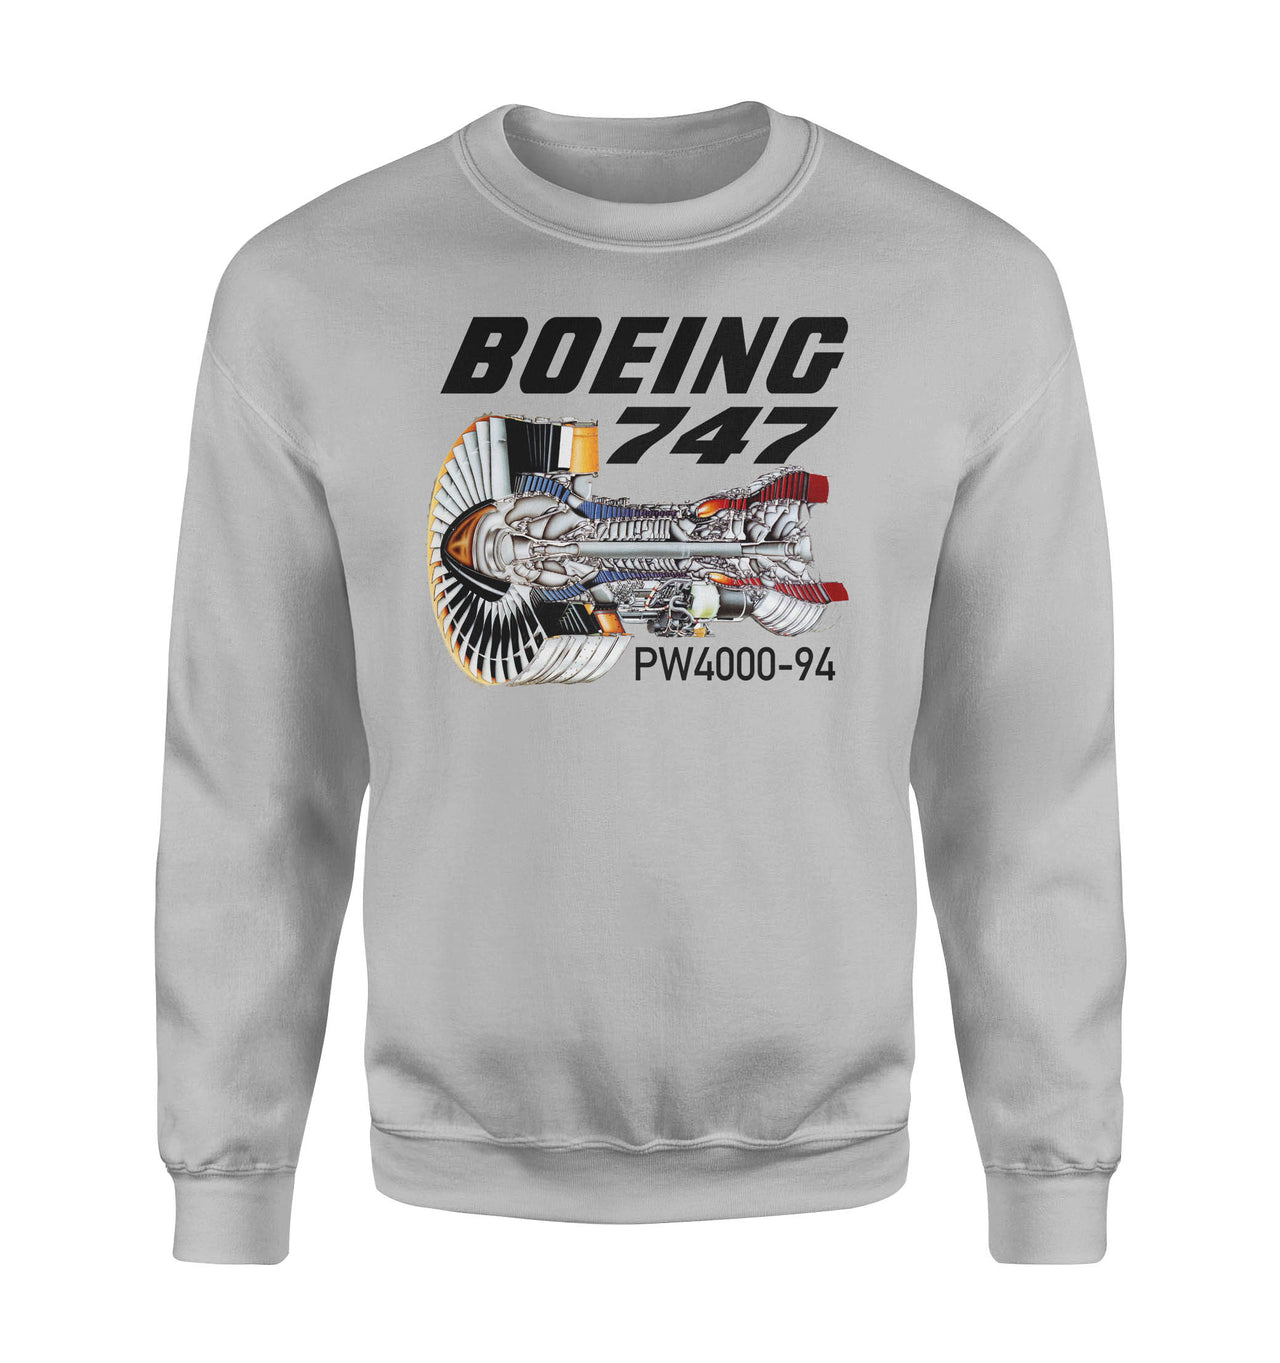 Boeing 747 & PW4000-94 Engine Designed Sweatshirts